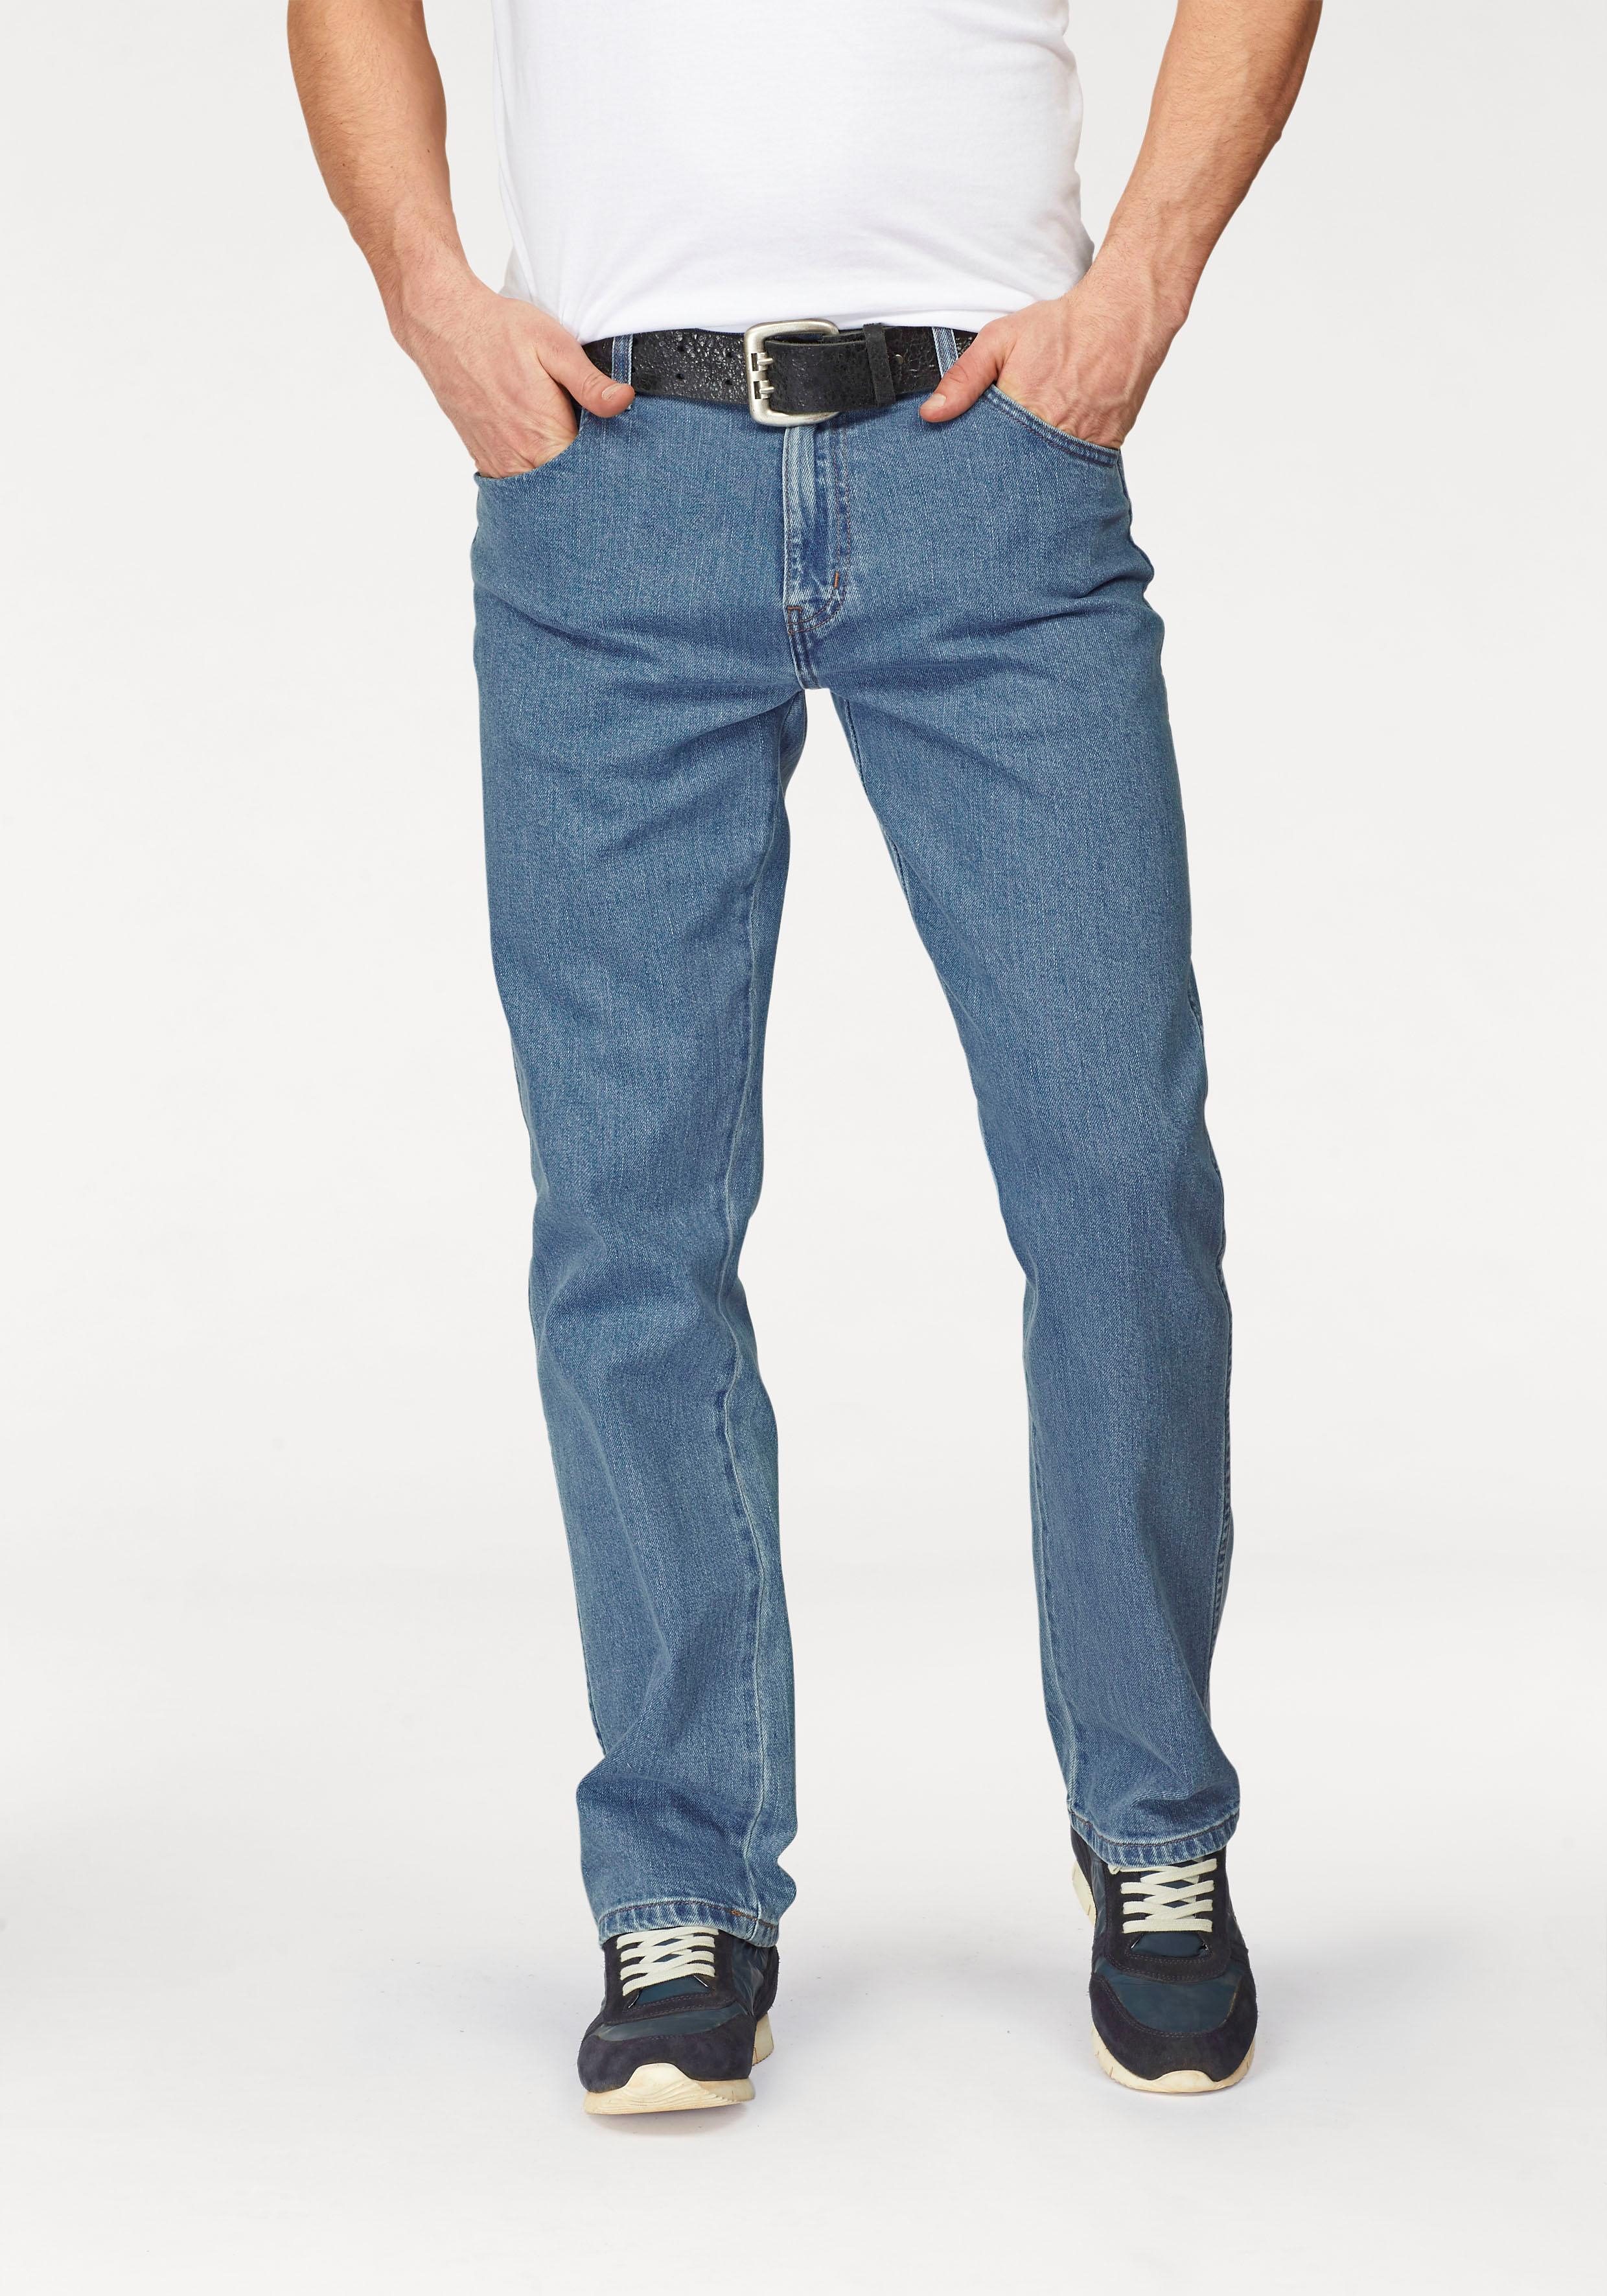 Otto - Wrangler NU 15% KORTING: Regular jeans, WRANGLER, stretch